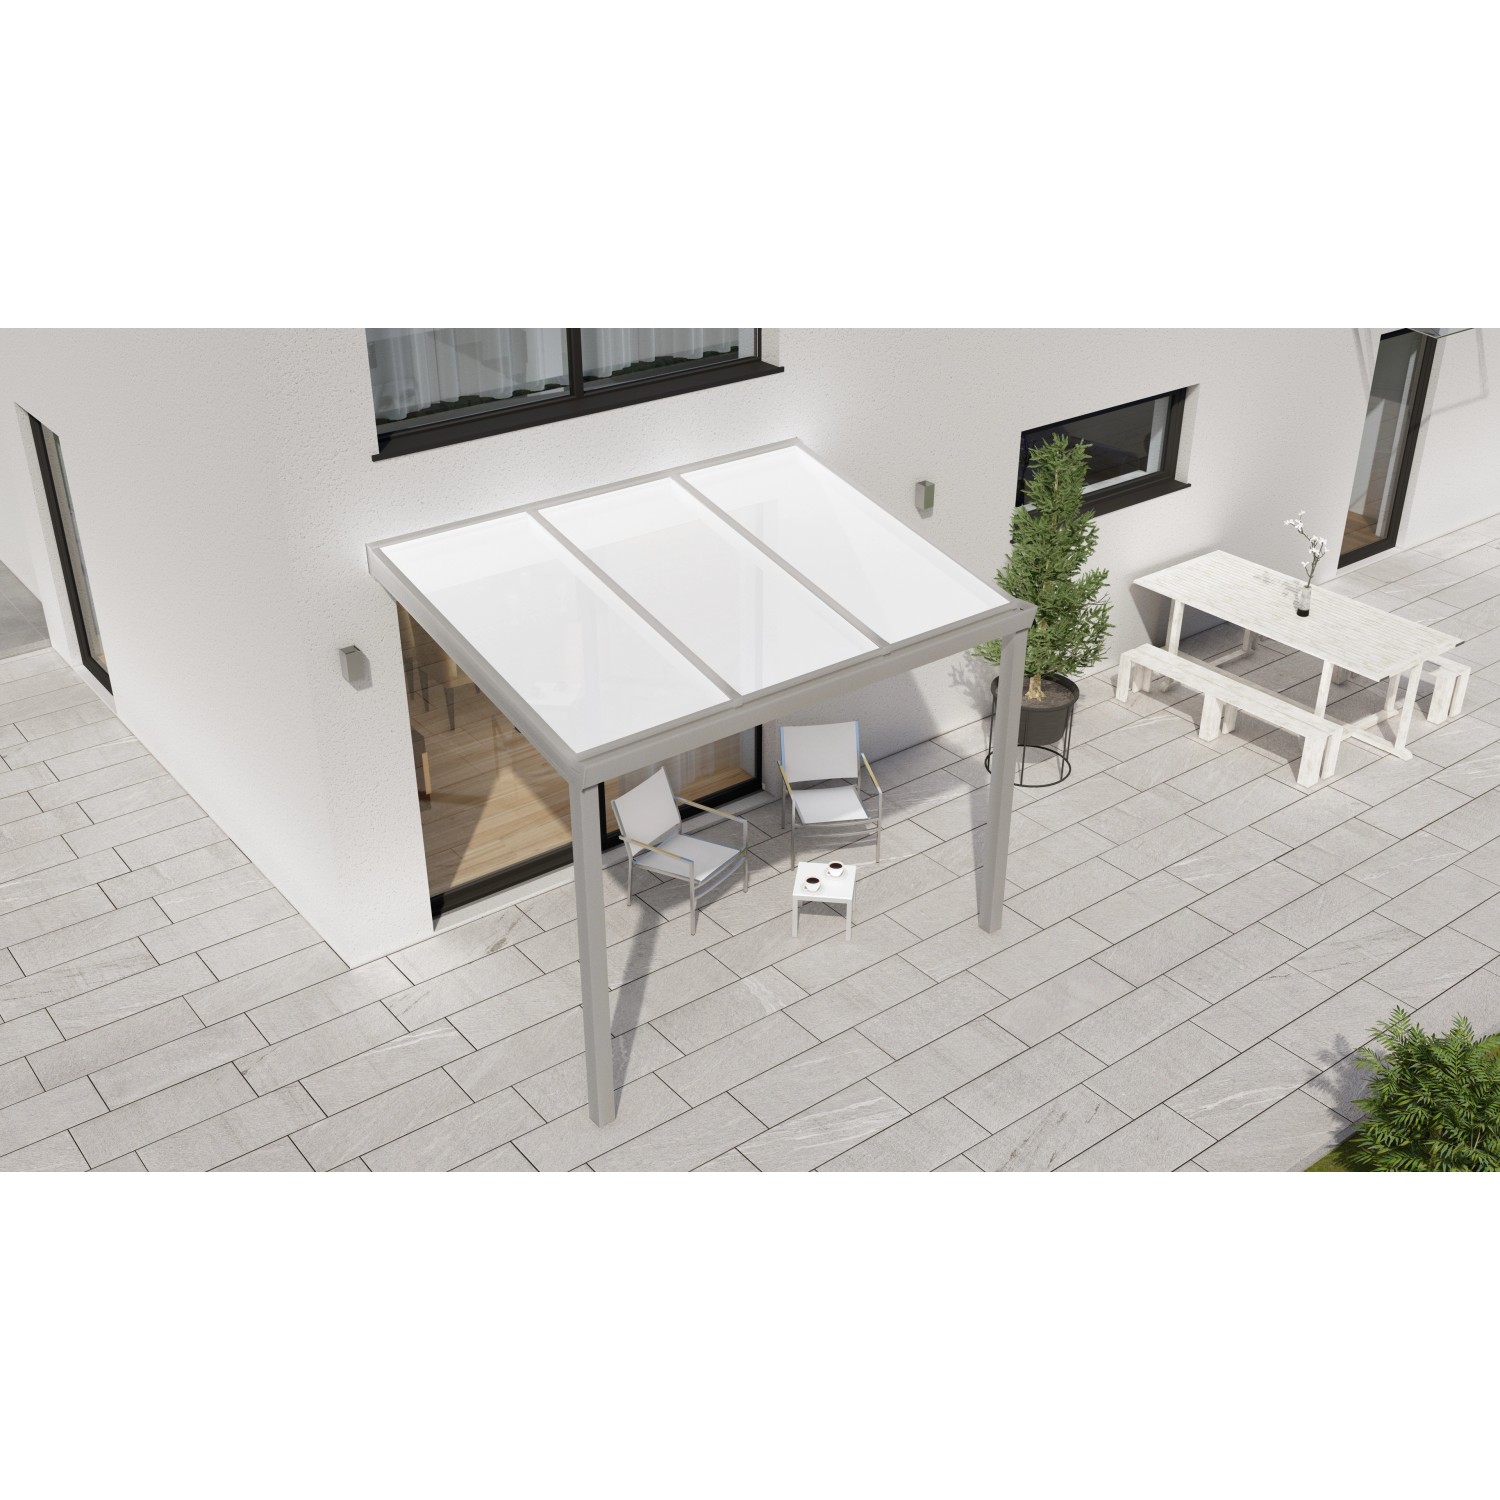 Terrassenüberdachung Professional 300 cm x 200 cm Grau Struktur PC Opal von GARDENDREAMS